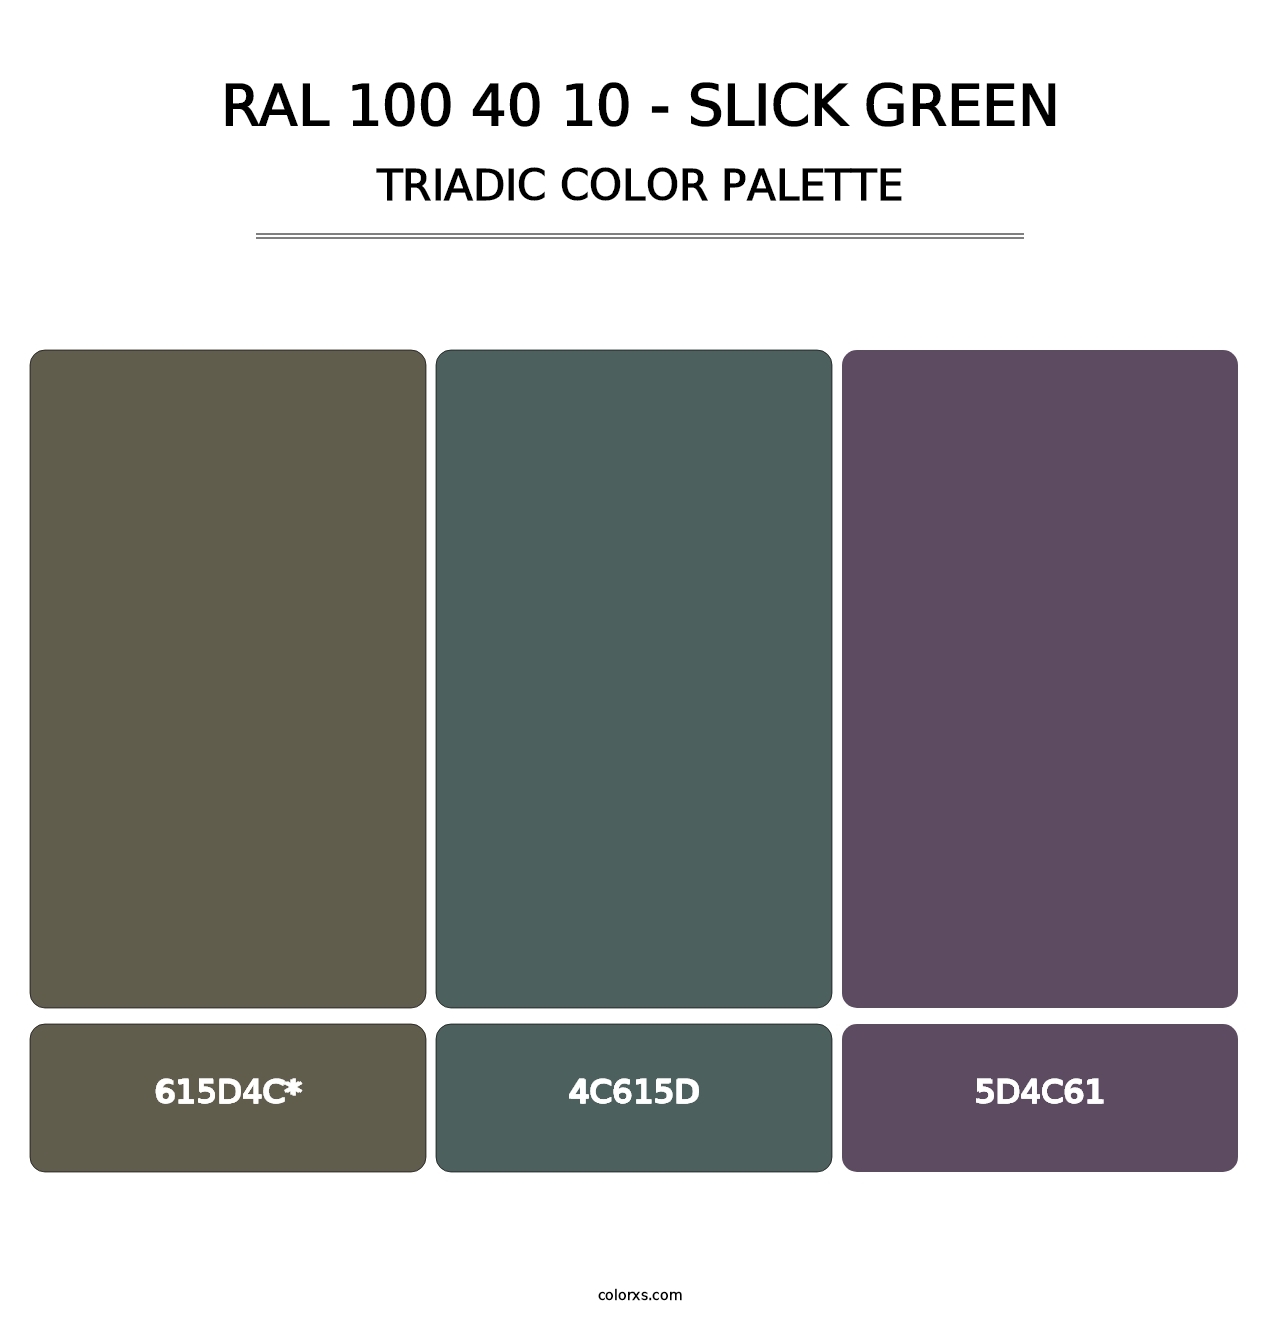 RAL 100 40 10 - Slick Green - Triadic Color Palette